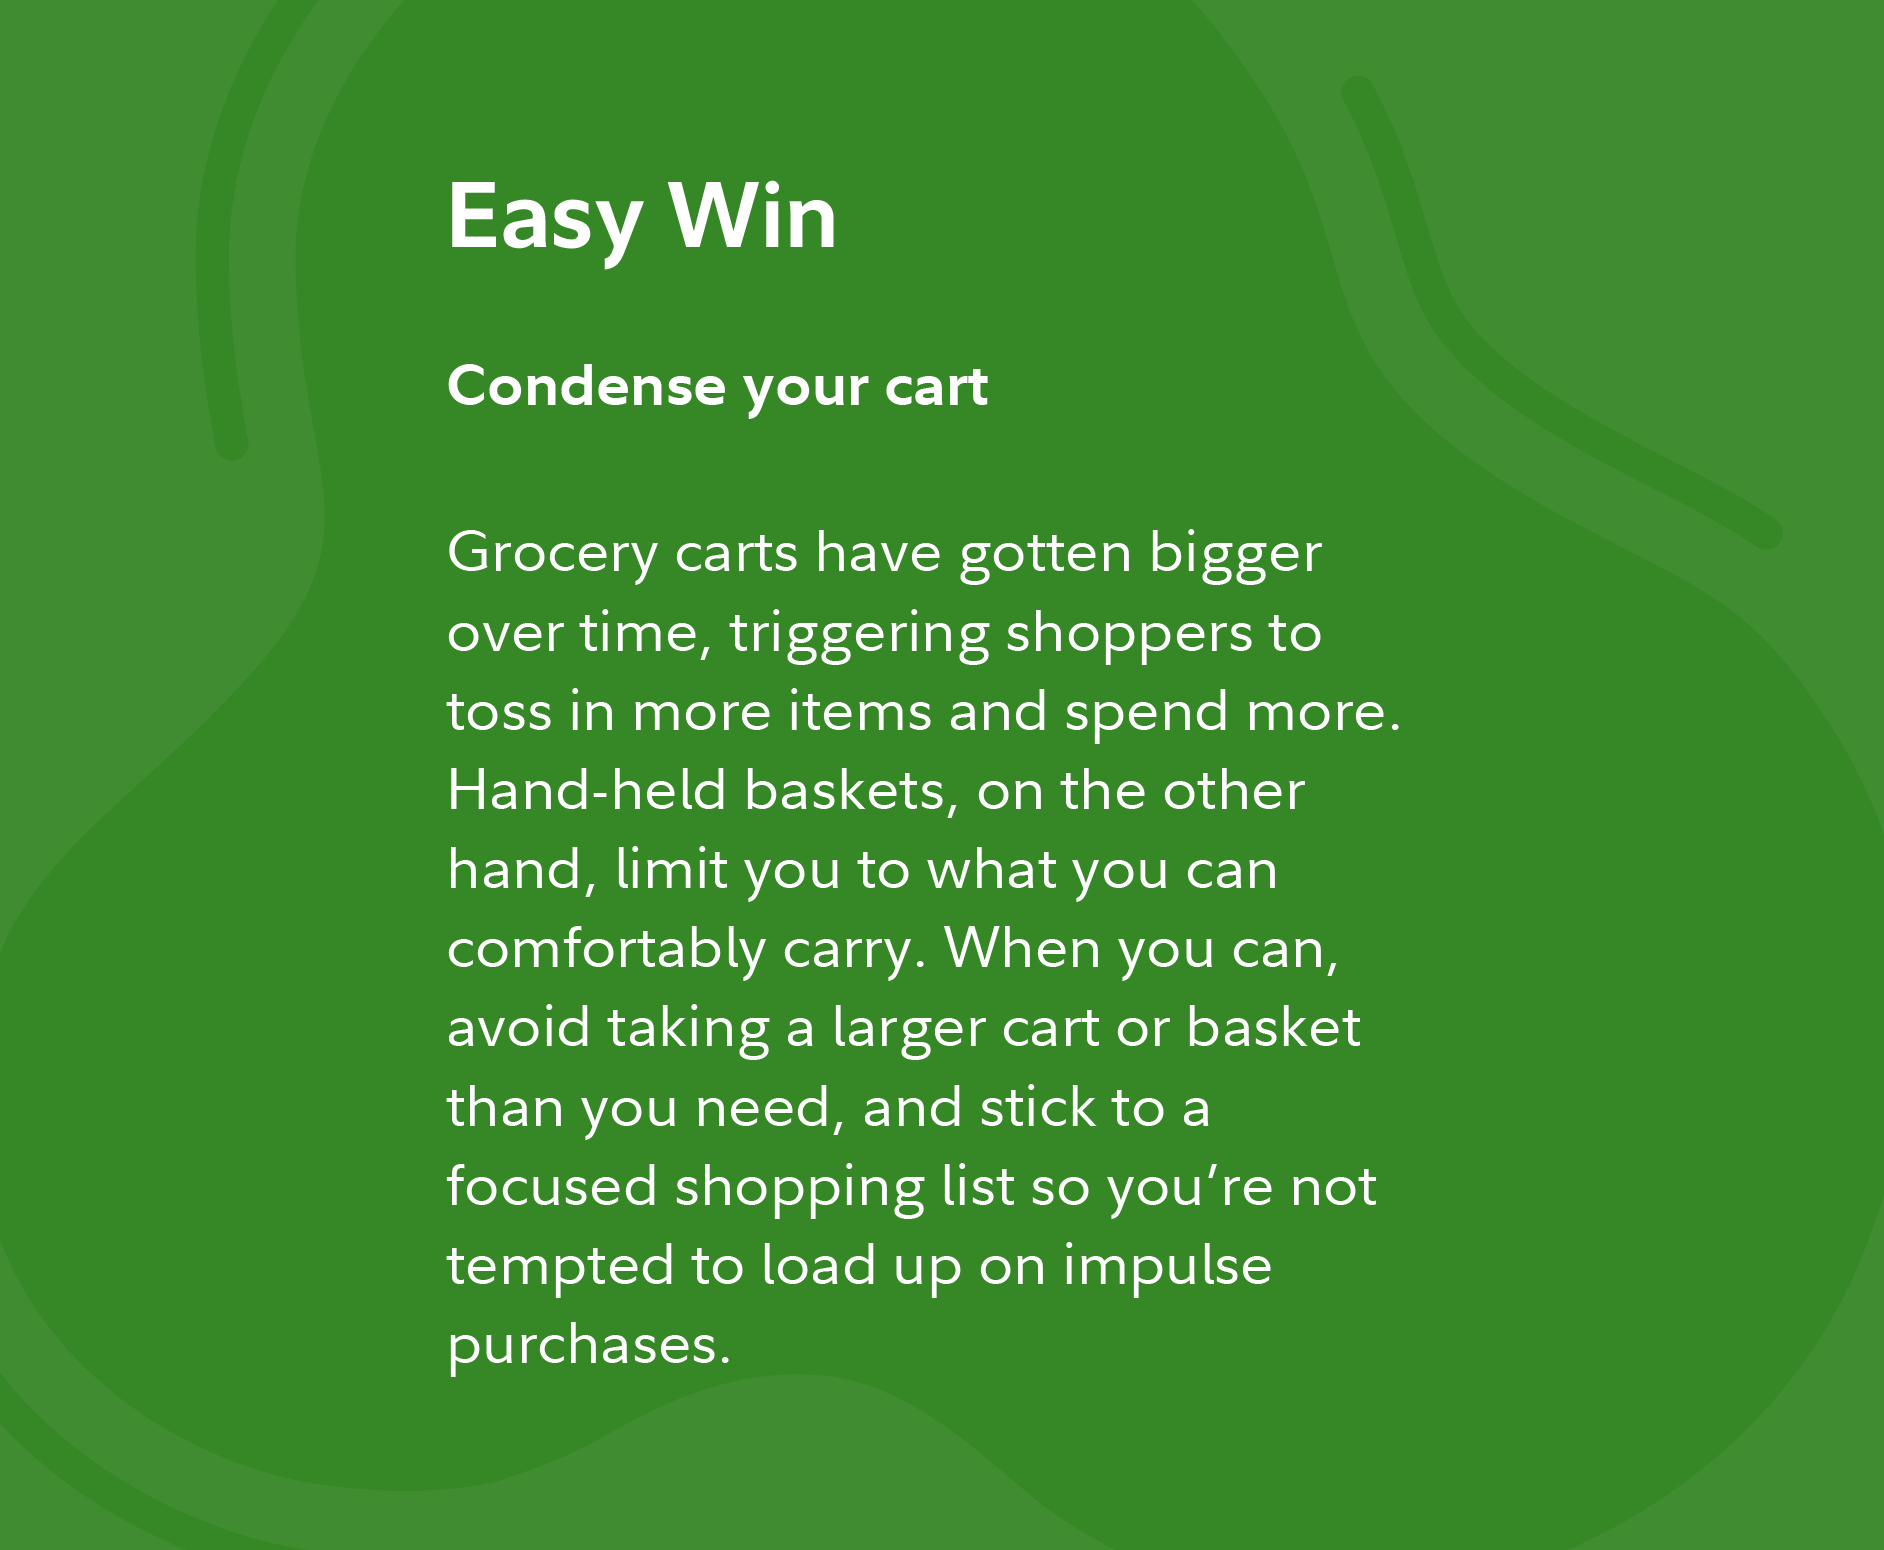 easy-win-sm_condense-your-cart